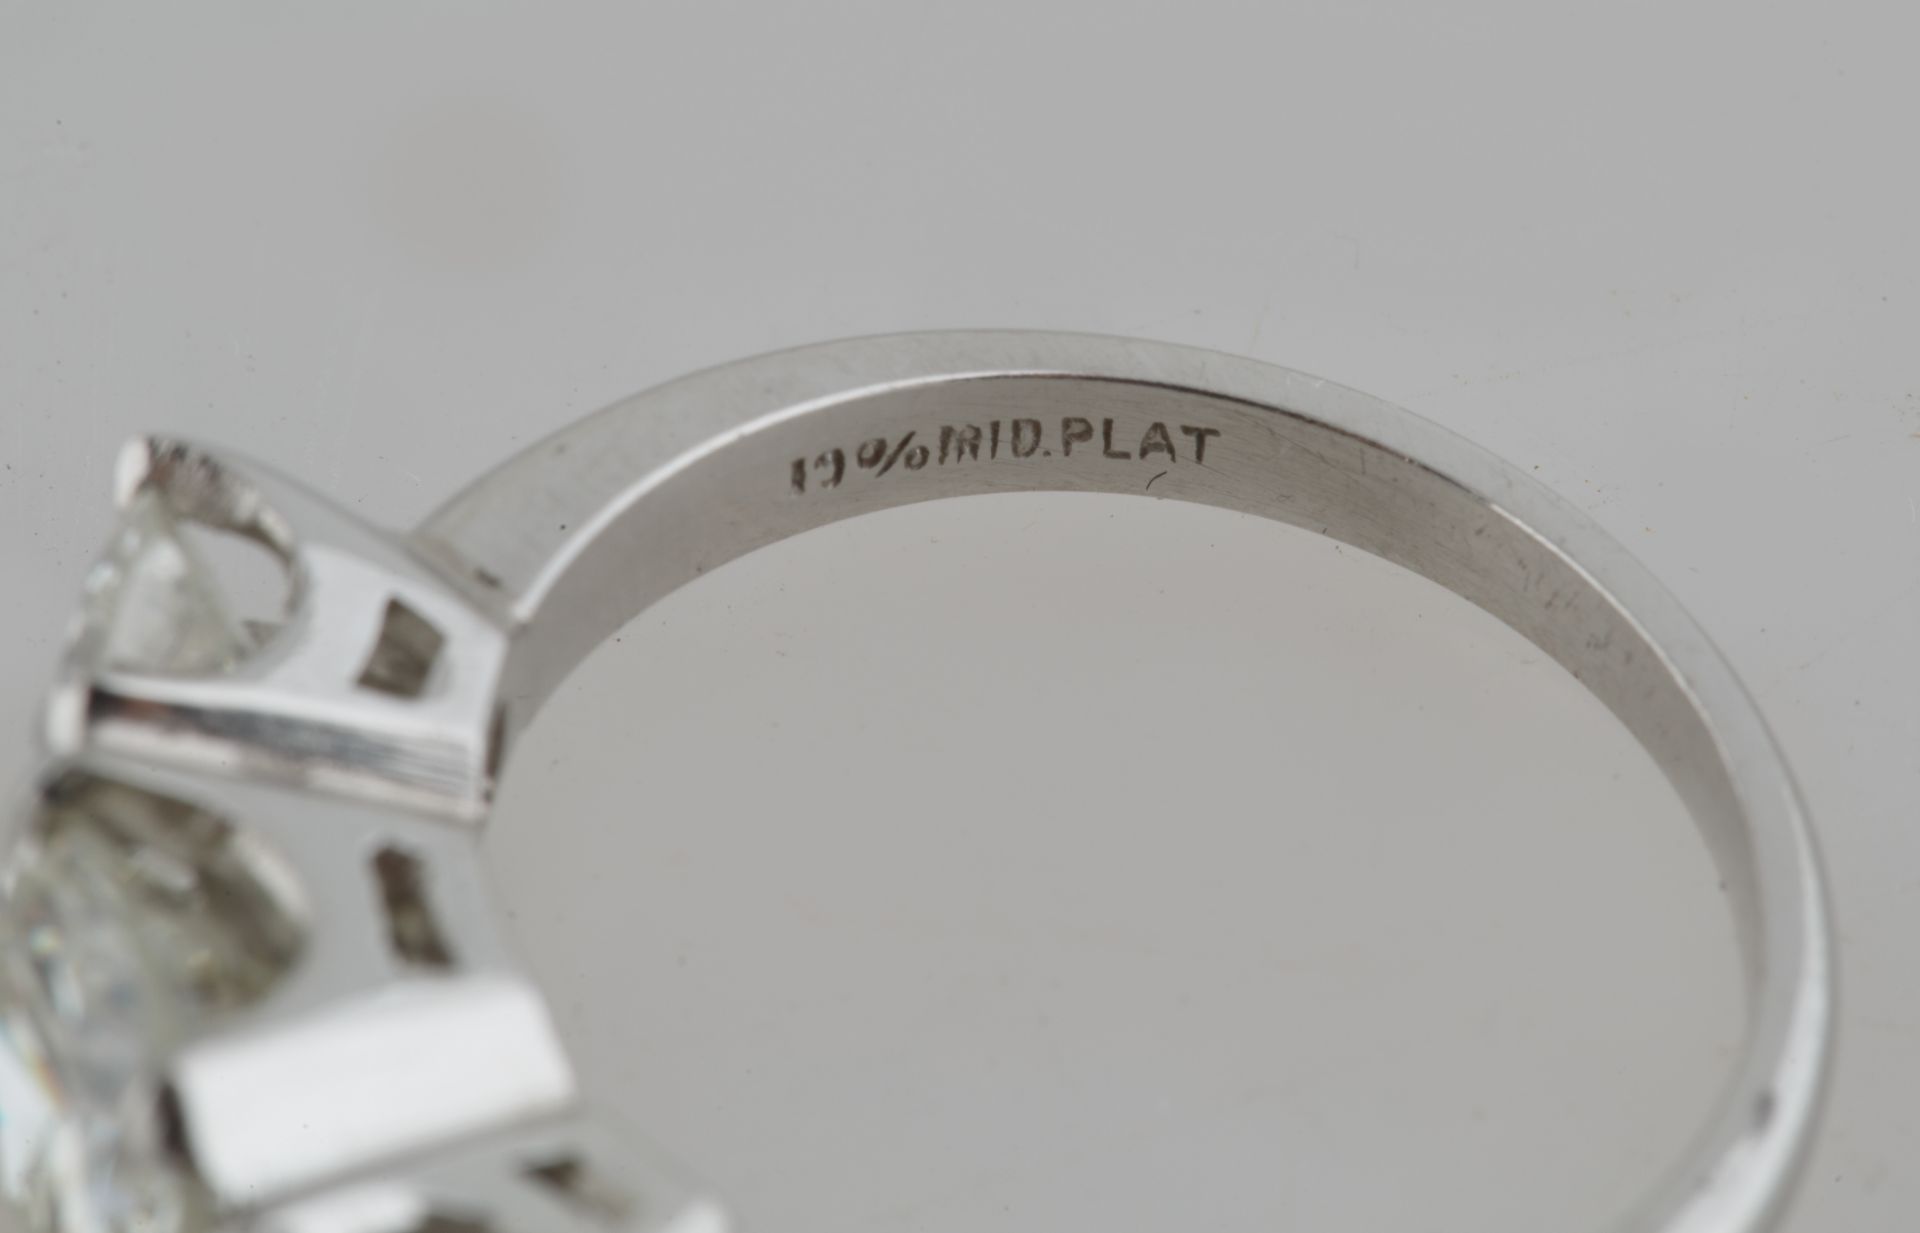 A 2.8 CT TRIPLE BRILLIANT ROUND-CUT DIAMOND RING SET IN PLATINUM - Image 4 of 5